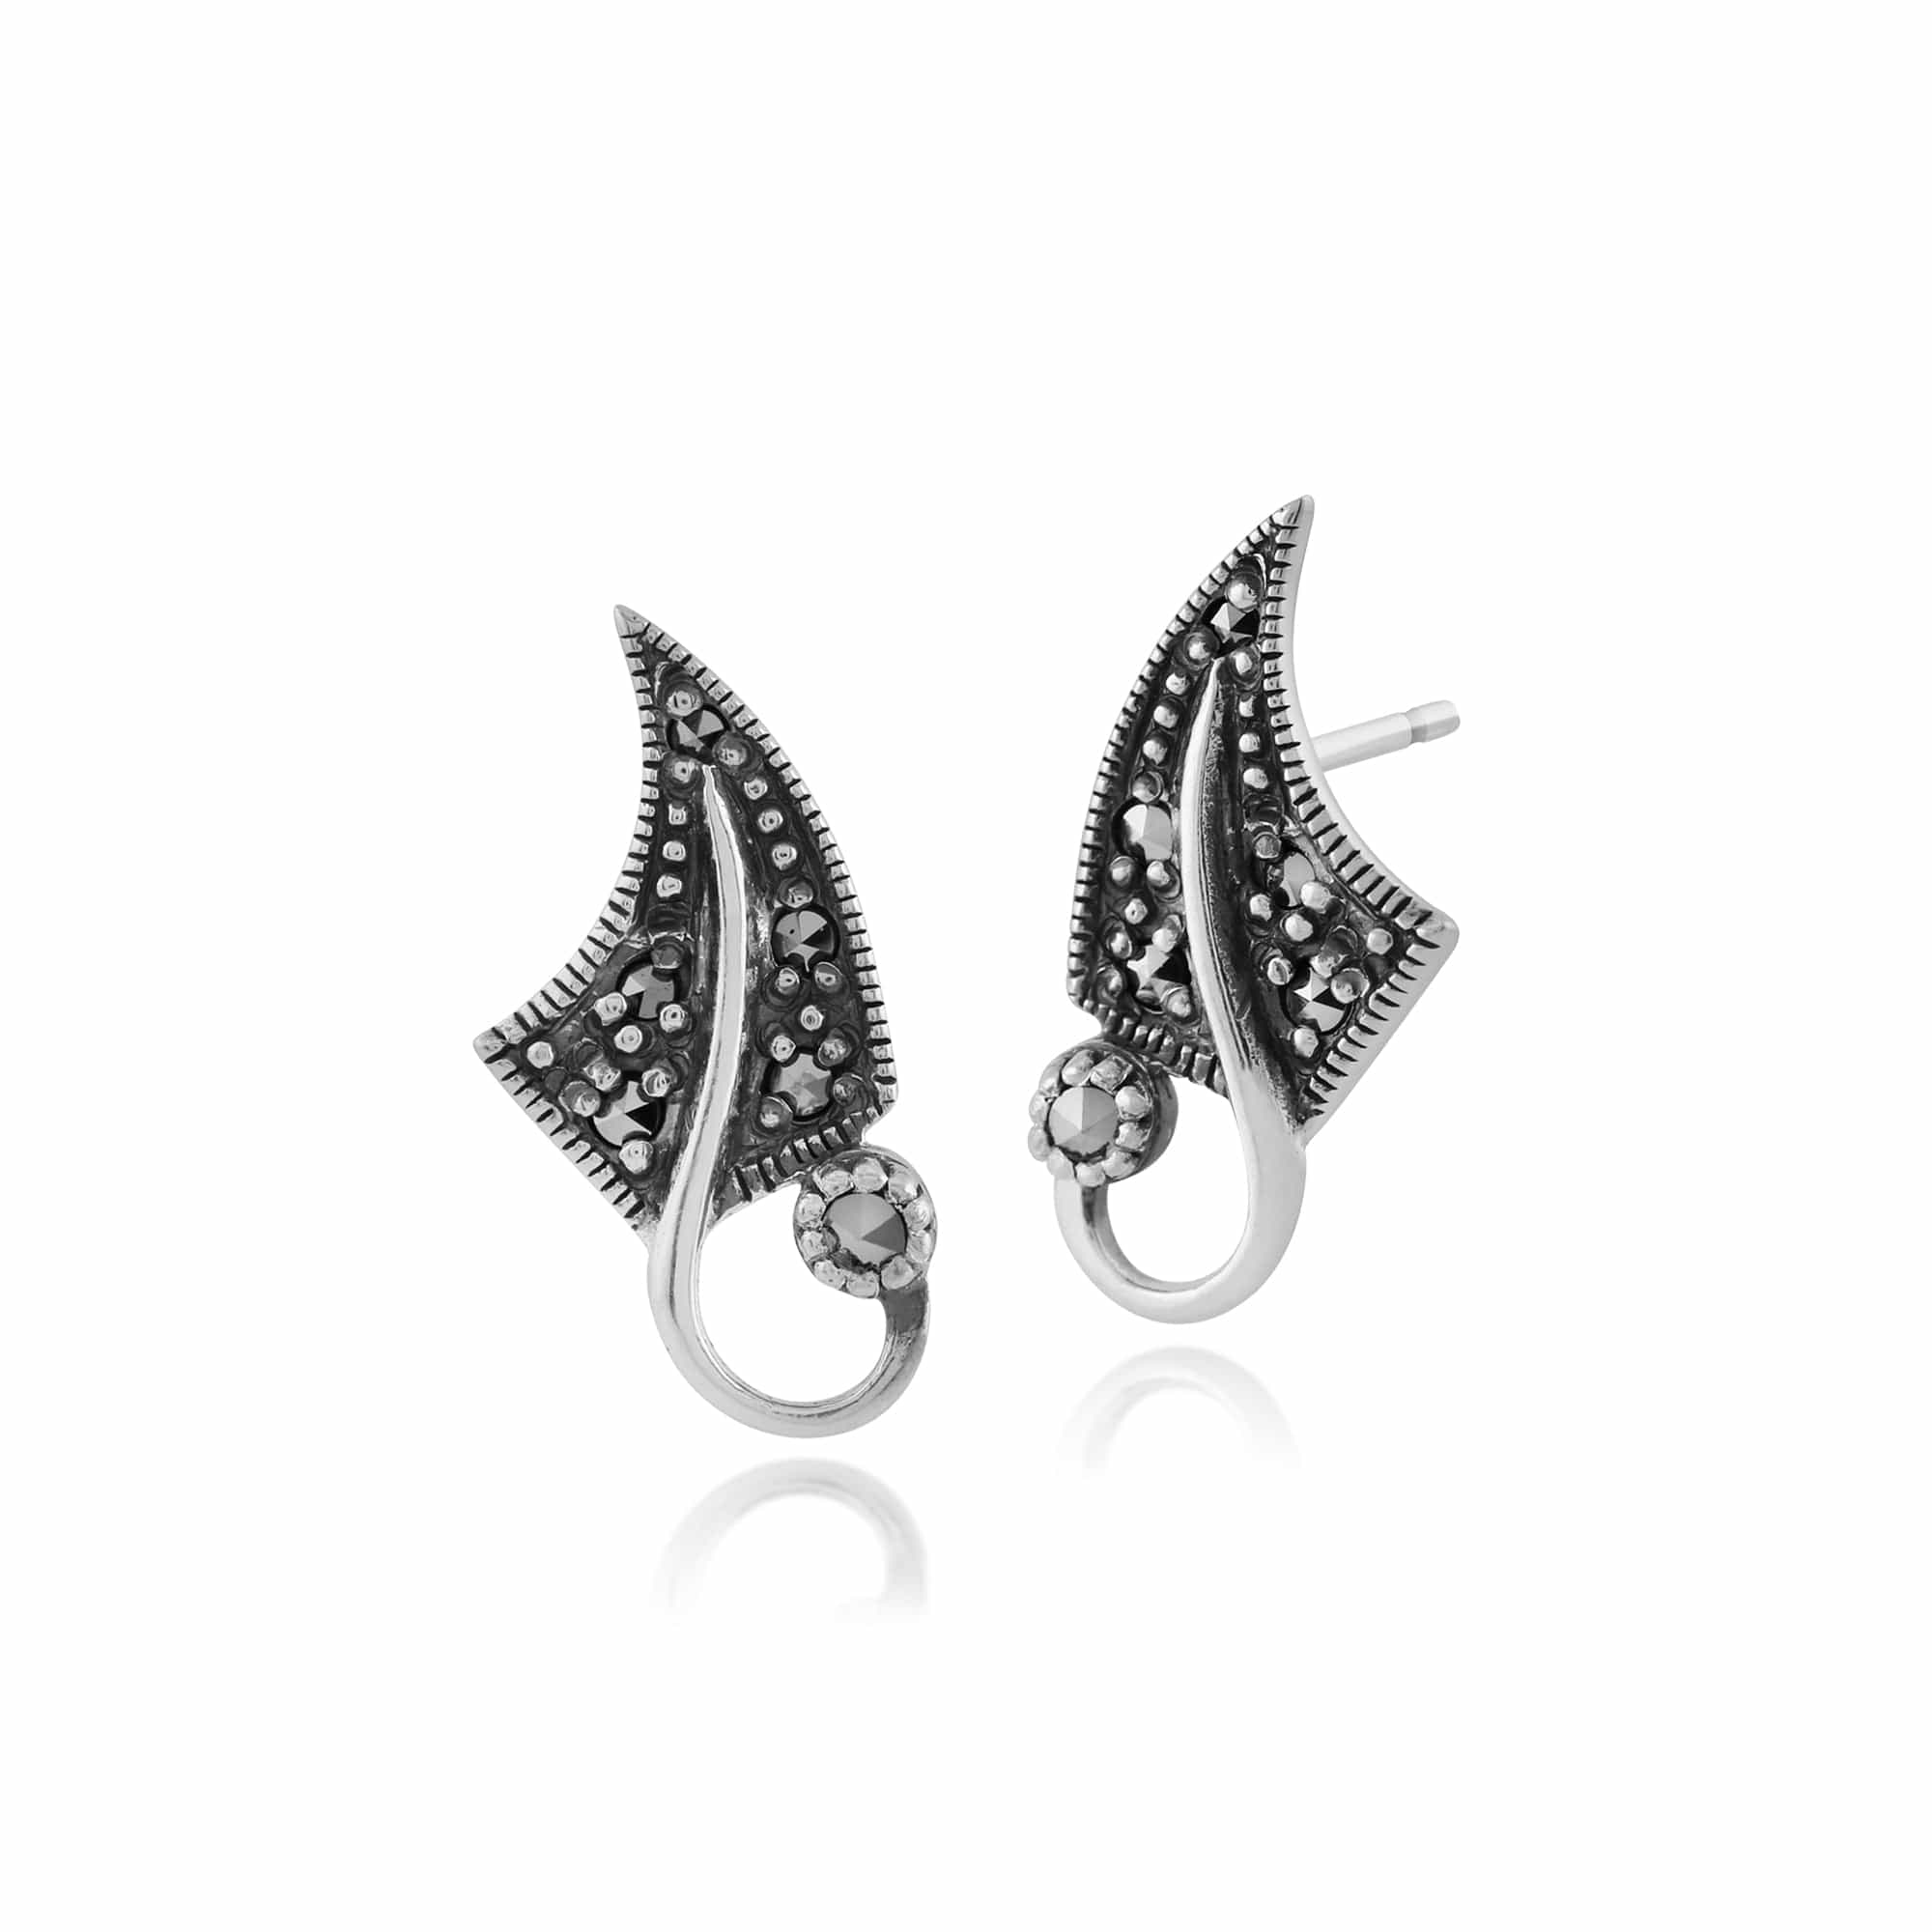 Art Nouveau Style Round Marcasite Leaf Stud Earrings in 925 Sterling Silver - Gemondo